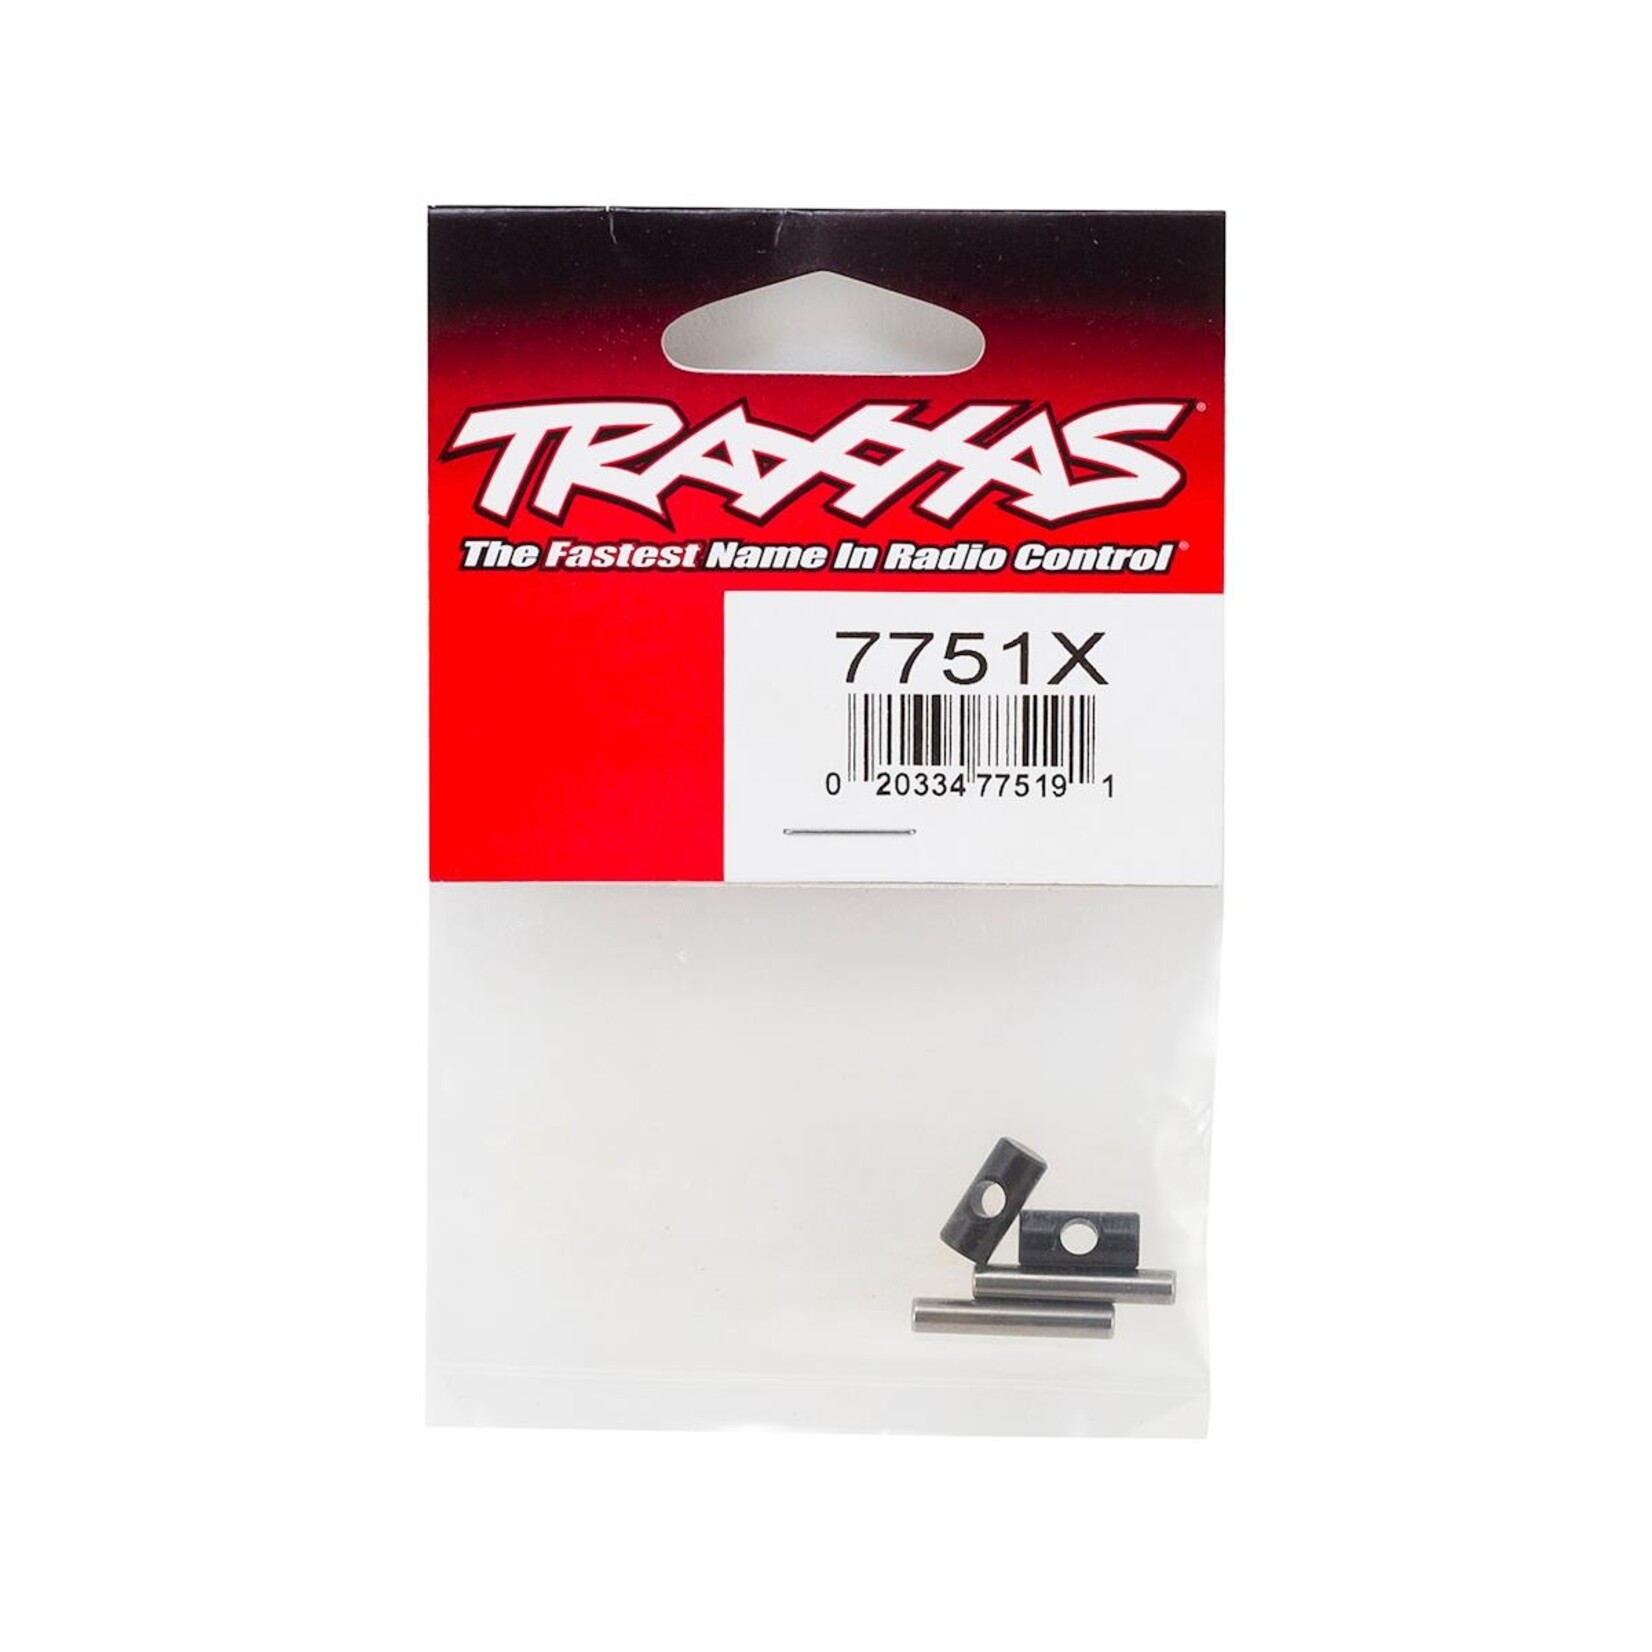 Traxxas Traxxas X-Maxx Constant Velocity Driveshaft Rebuild Kit (use with 7750X) #7751X